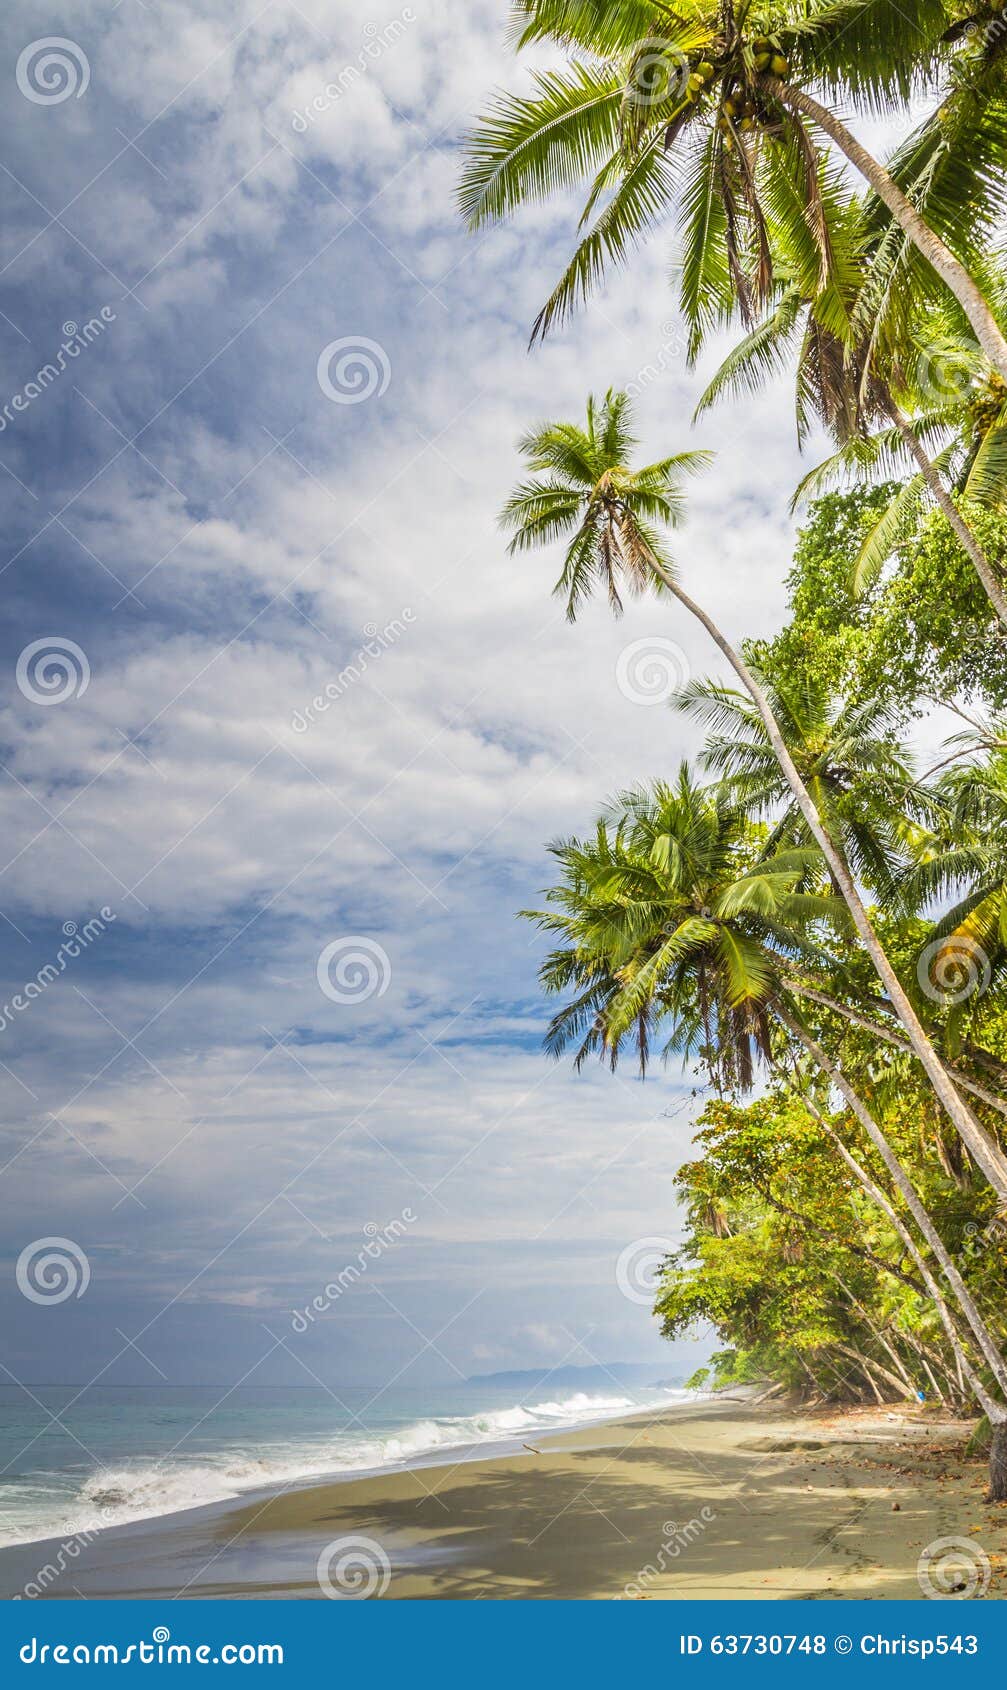 Tropical Palm Fringed Beach Stock Photo - Image of ocean, spray: 63730748